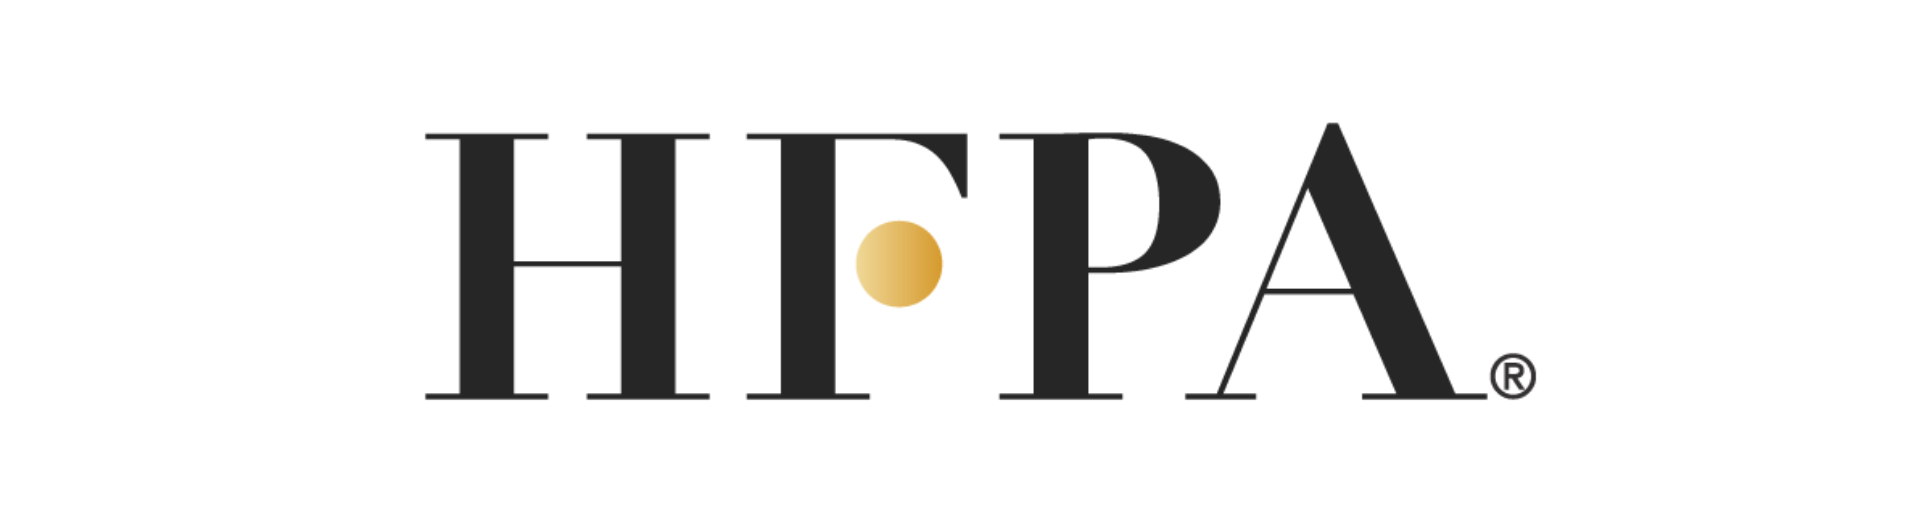 FEA Banner_HFPA